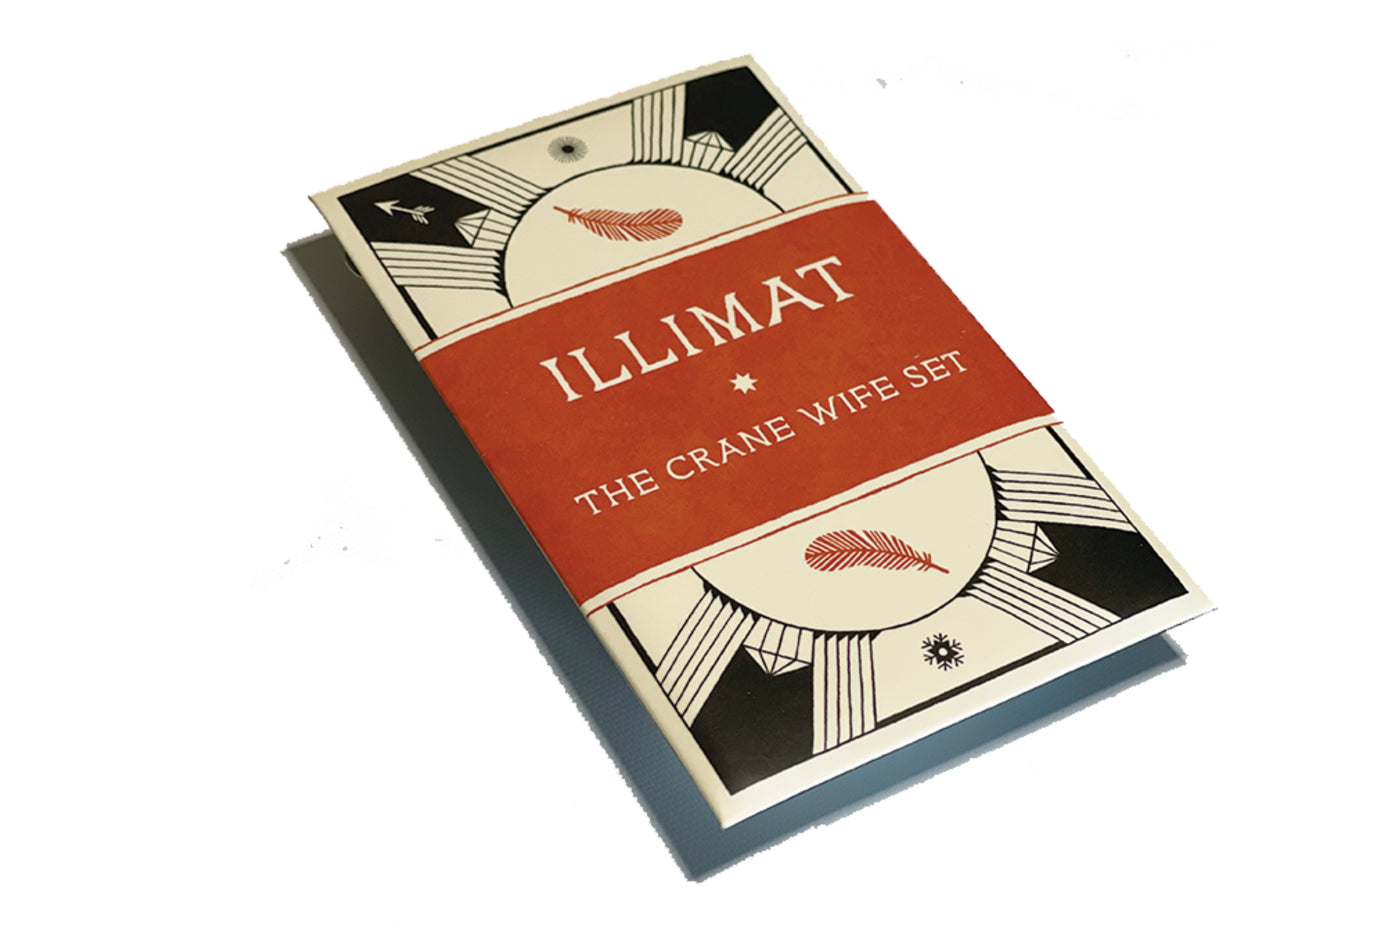 Illimat:The Crane Wife Set